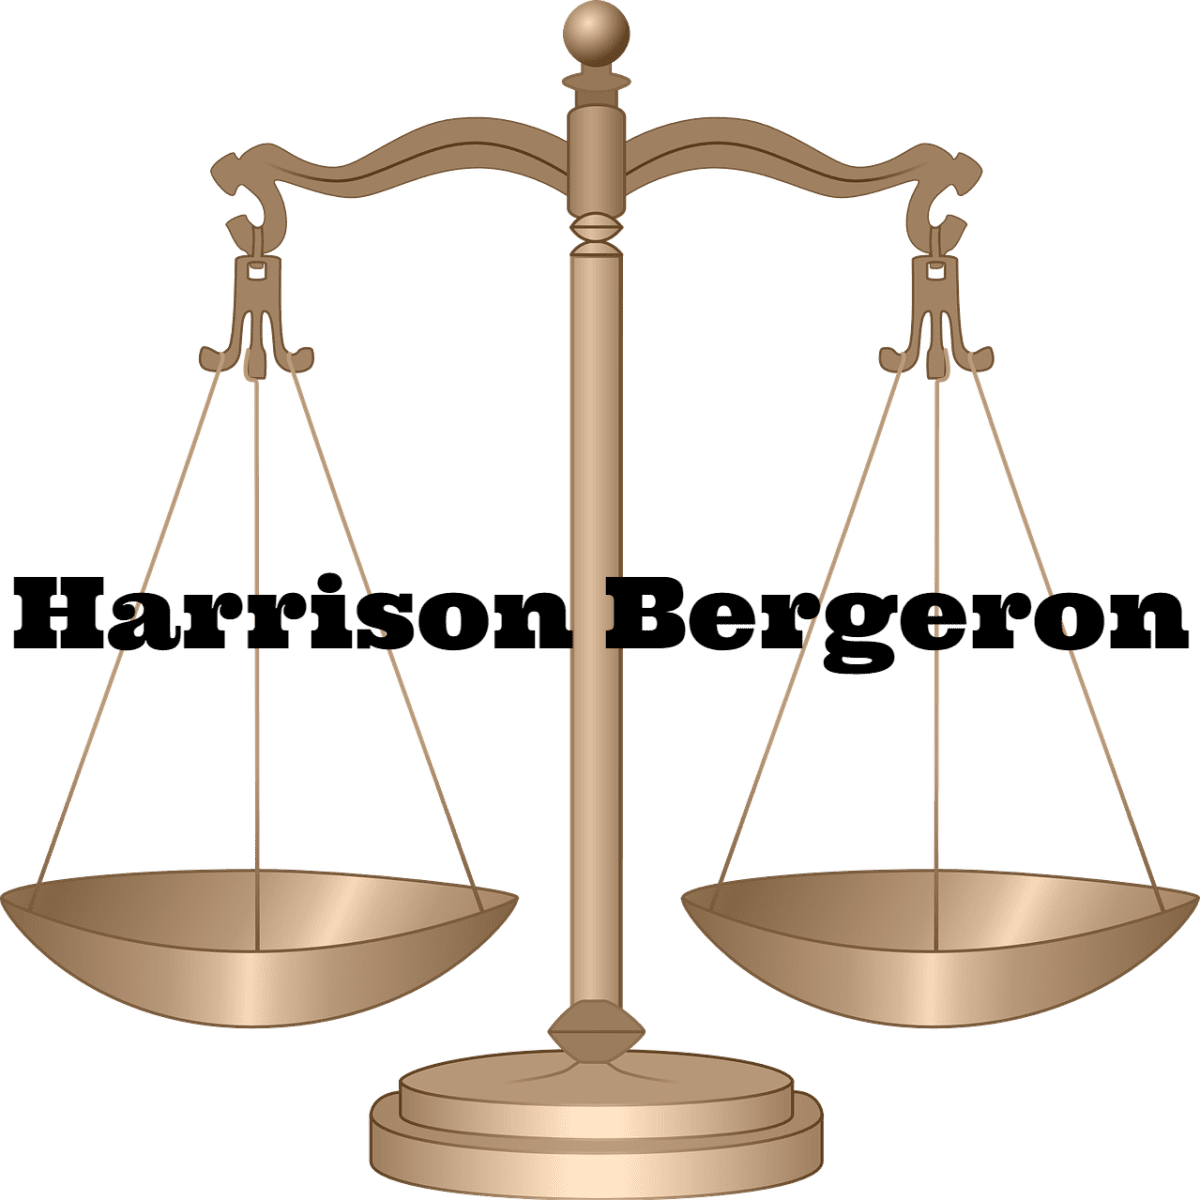 harrison bergeron equality essay